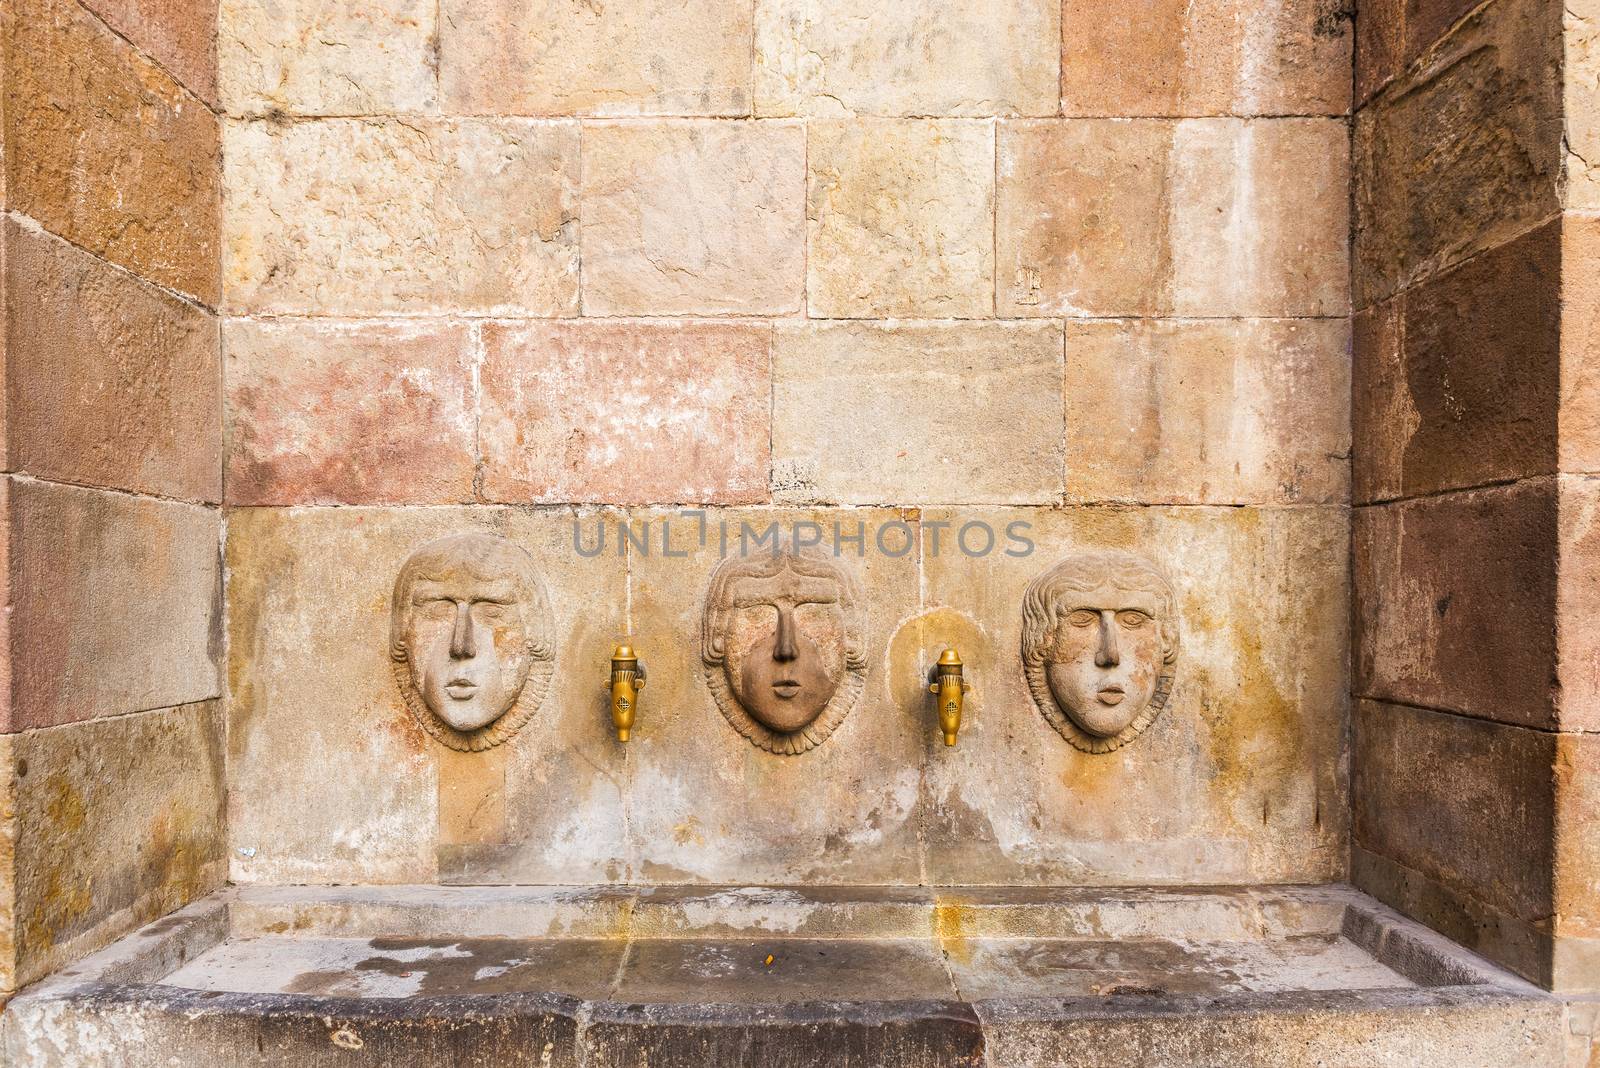 Public Drinking Fountain, Barcelona, Spain by Marcus